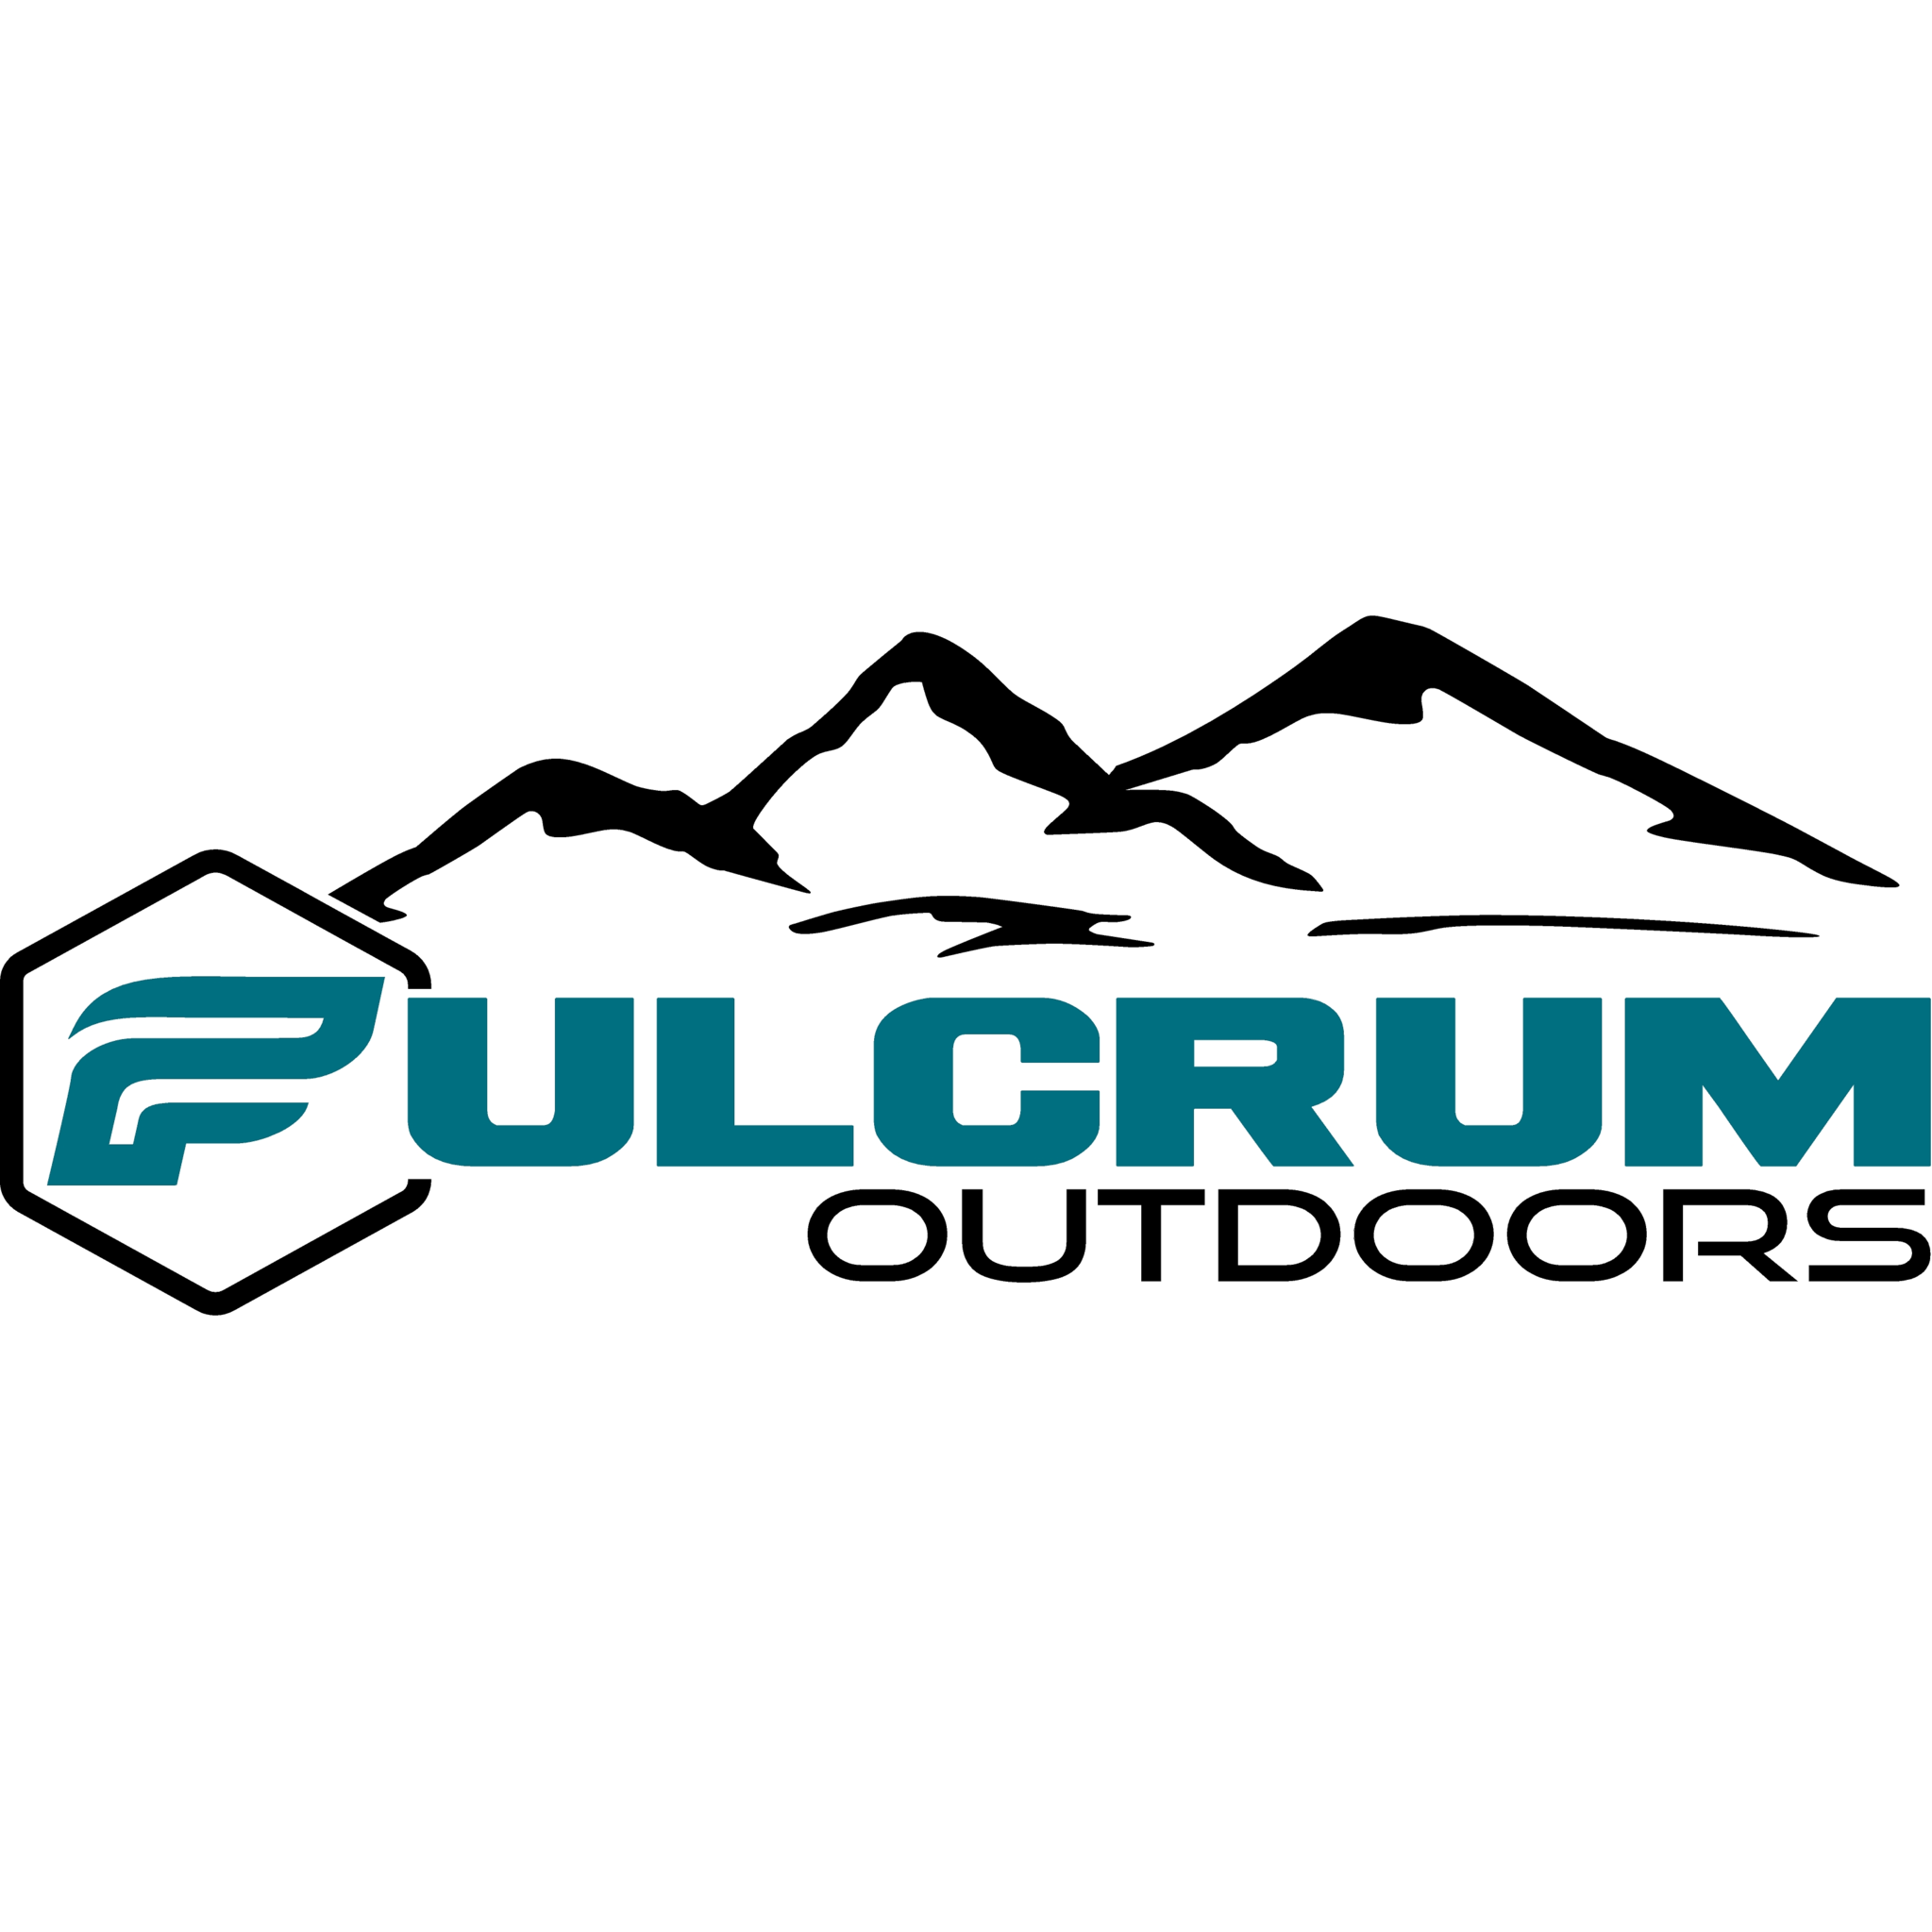 Fulcrum Outdoors Logo